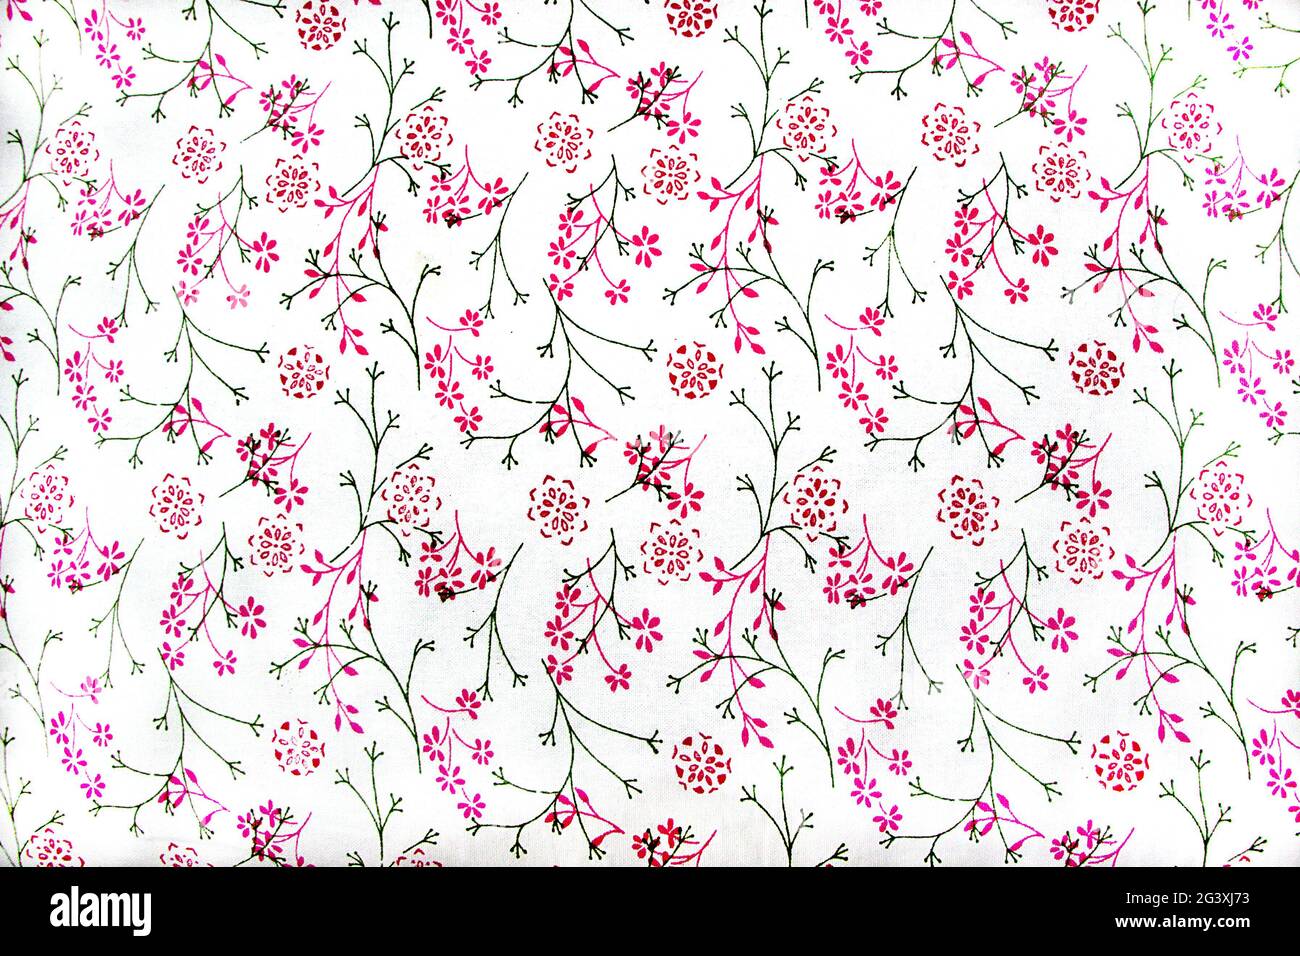 Motivo floral sobre tejido blanco Foto de stock